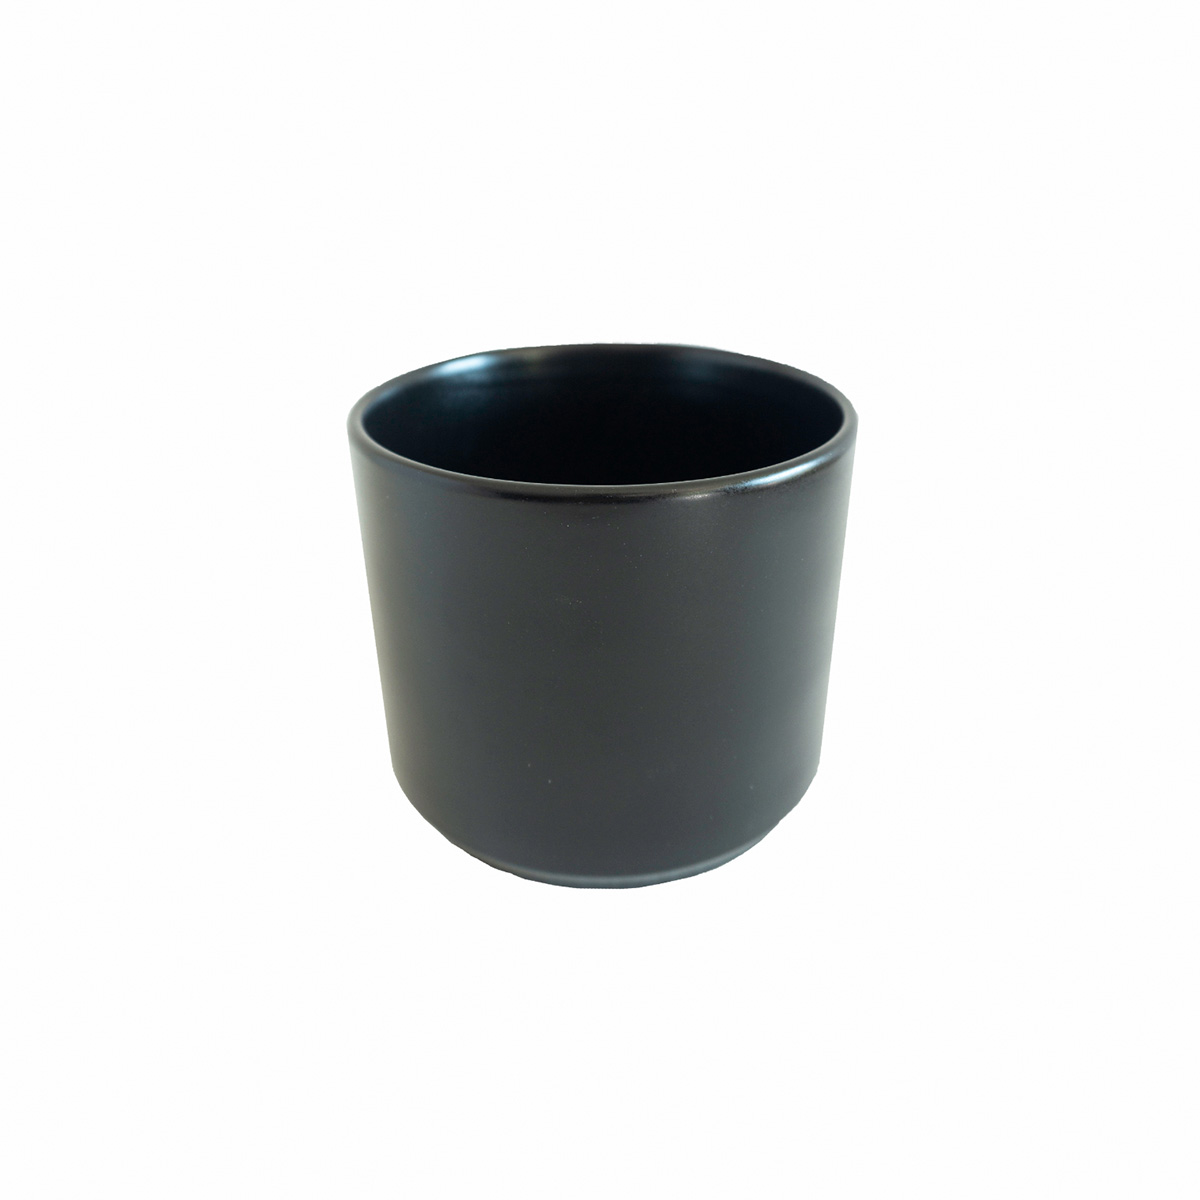  Round Black Clay Pot 